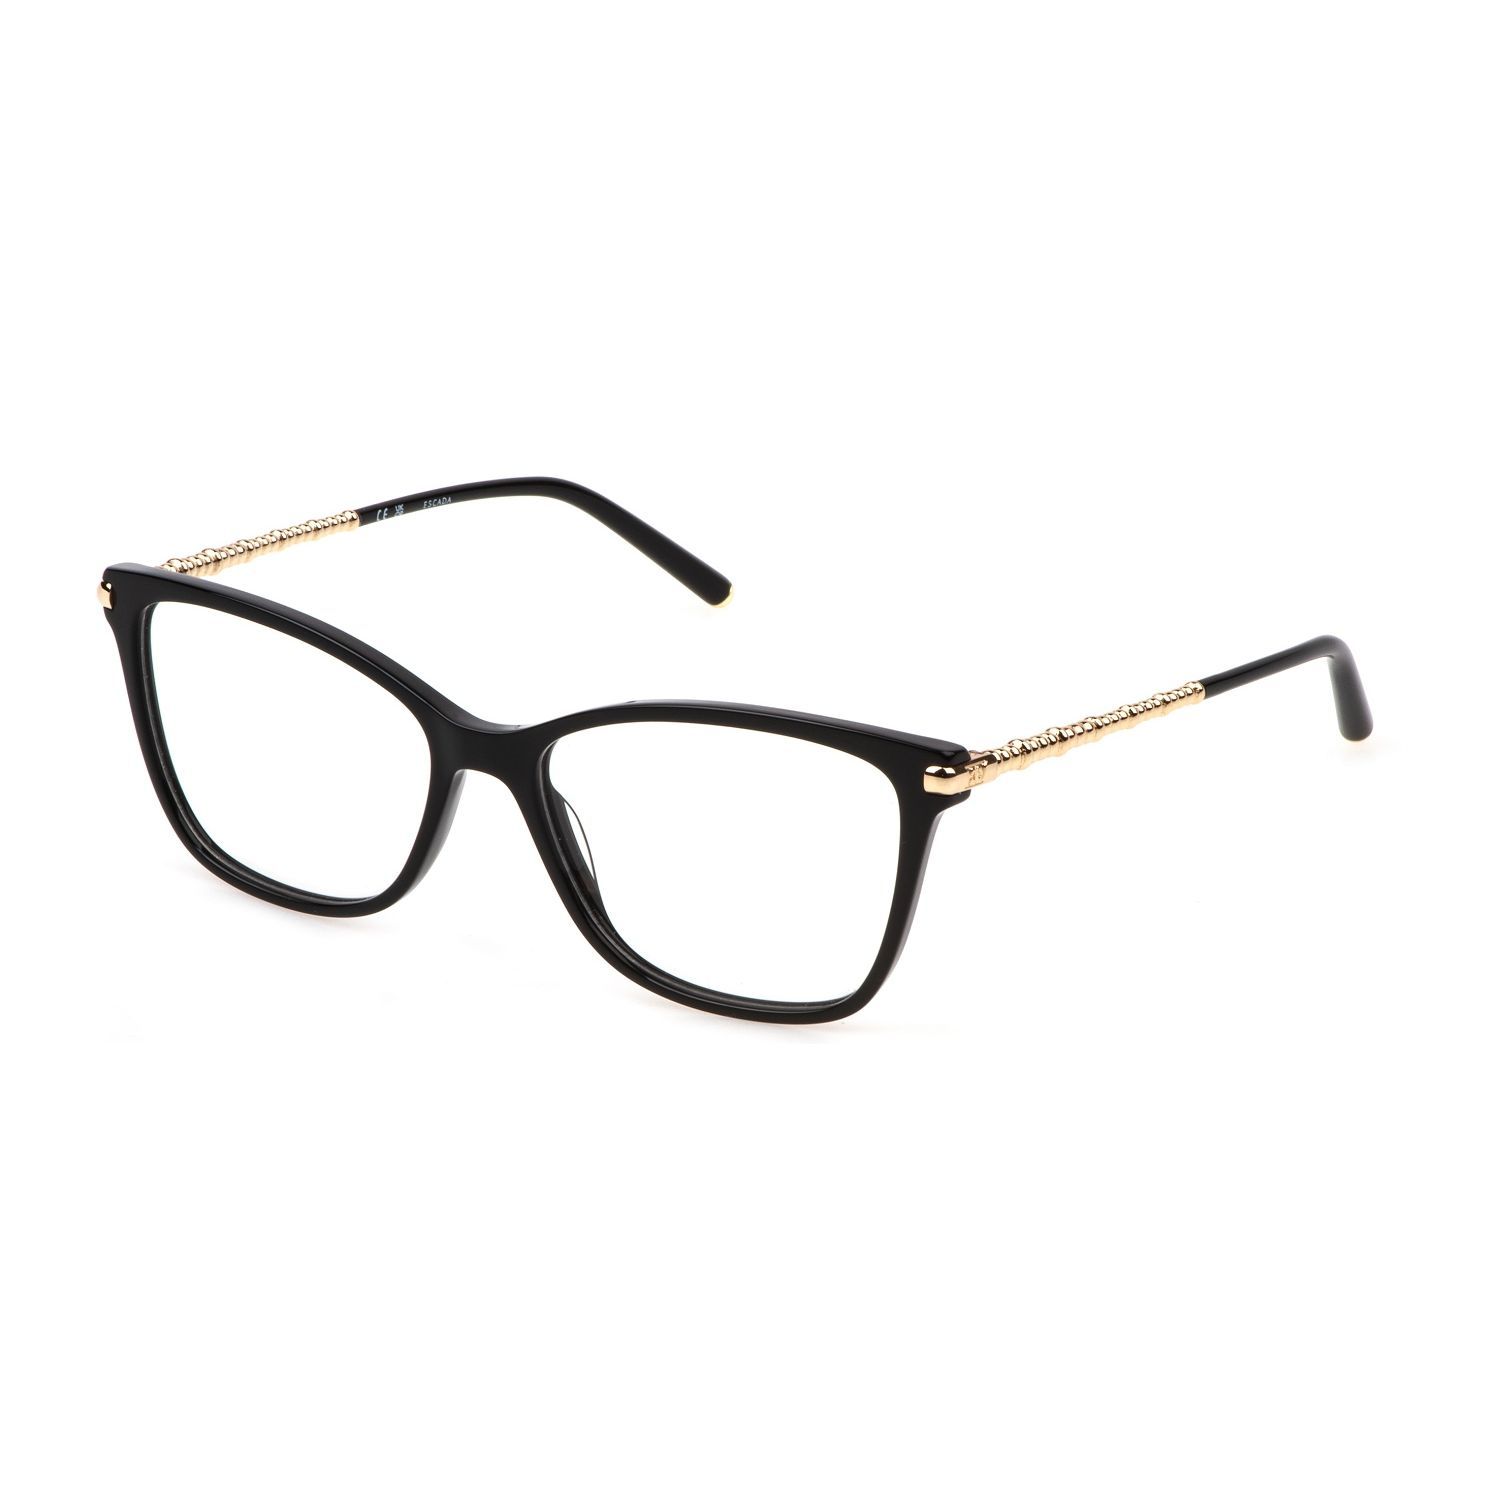 VESE43 Square Eyeglasses 700Y - size 55